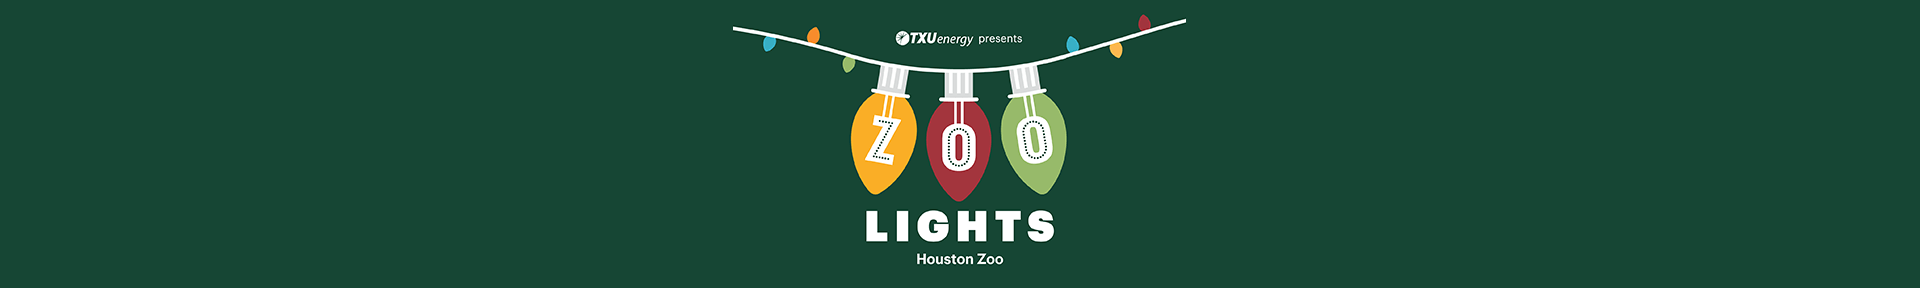 Zoo Lights at Houston Zoo